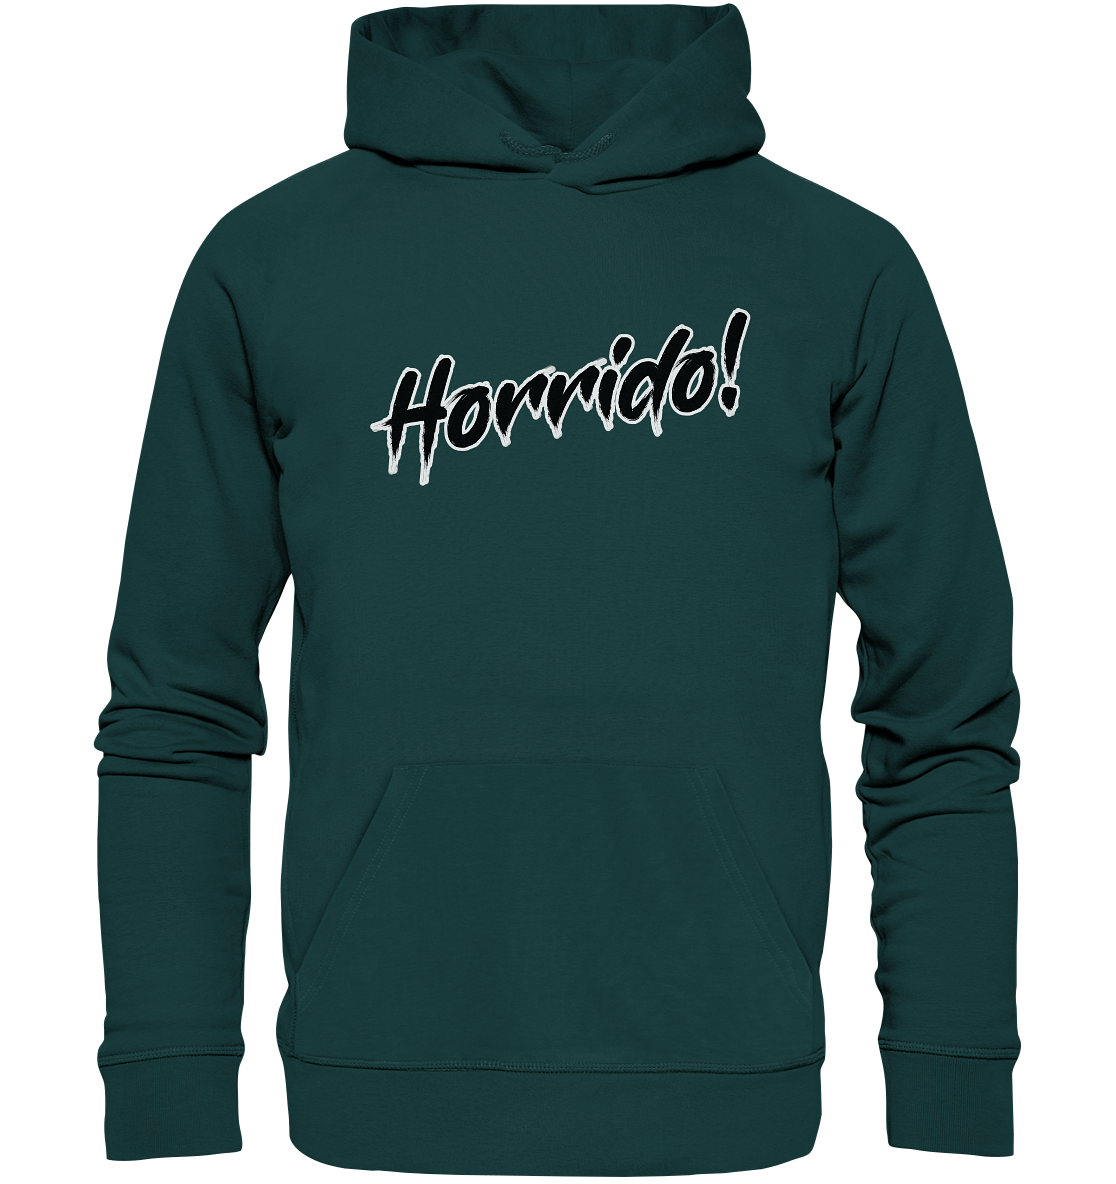 Horrido! - Organic Hoodie